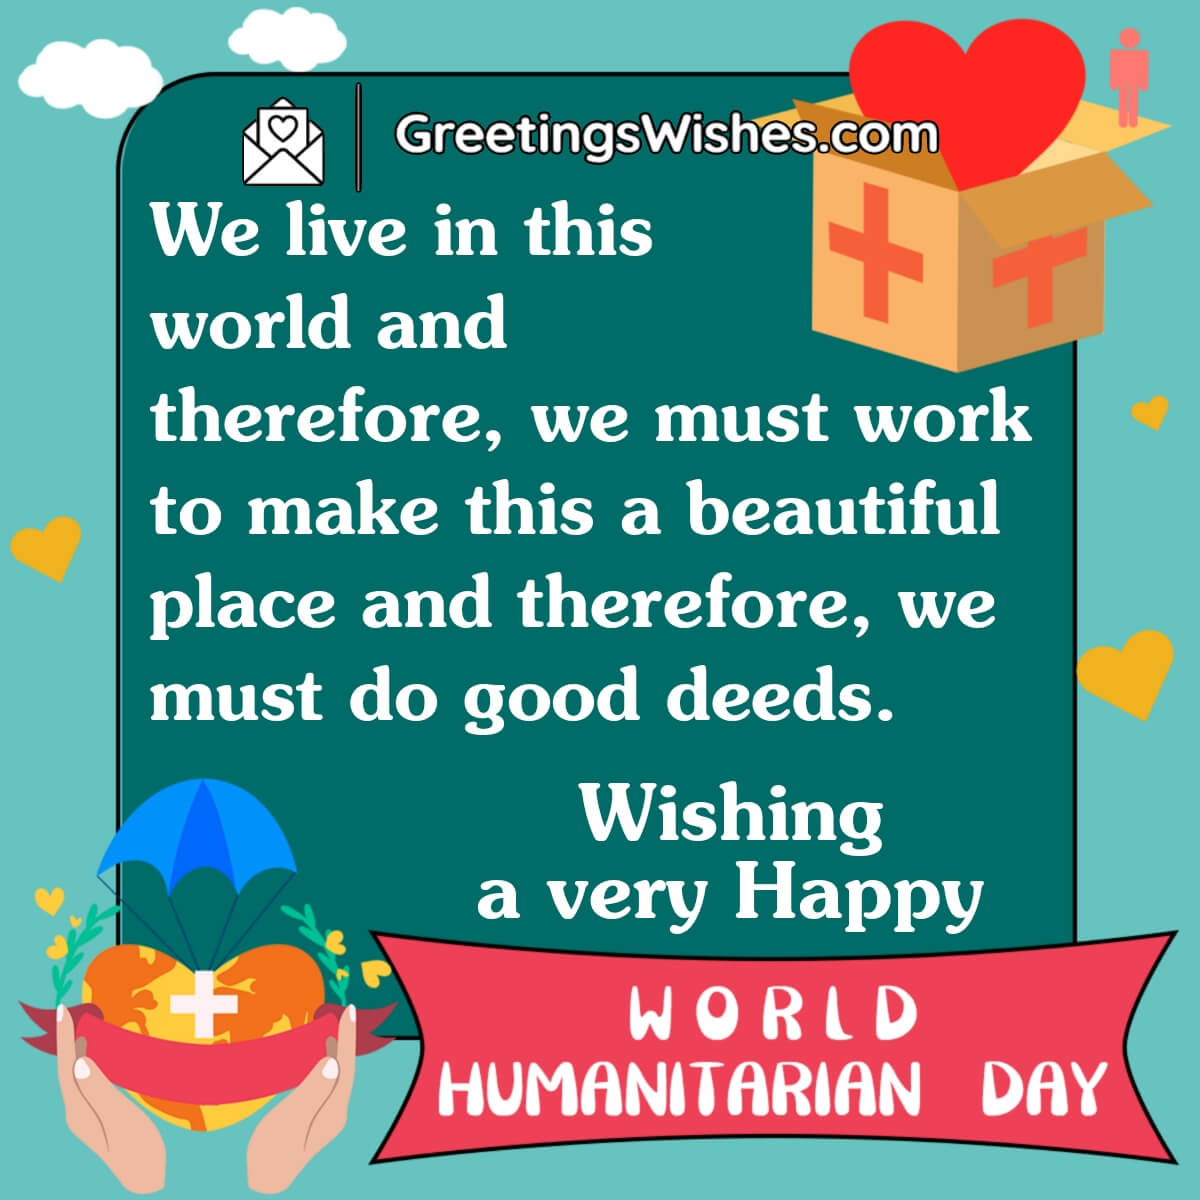 World Humanitarian Day Message Image